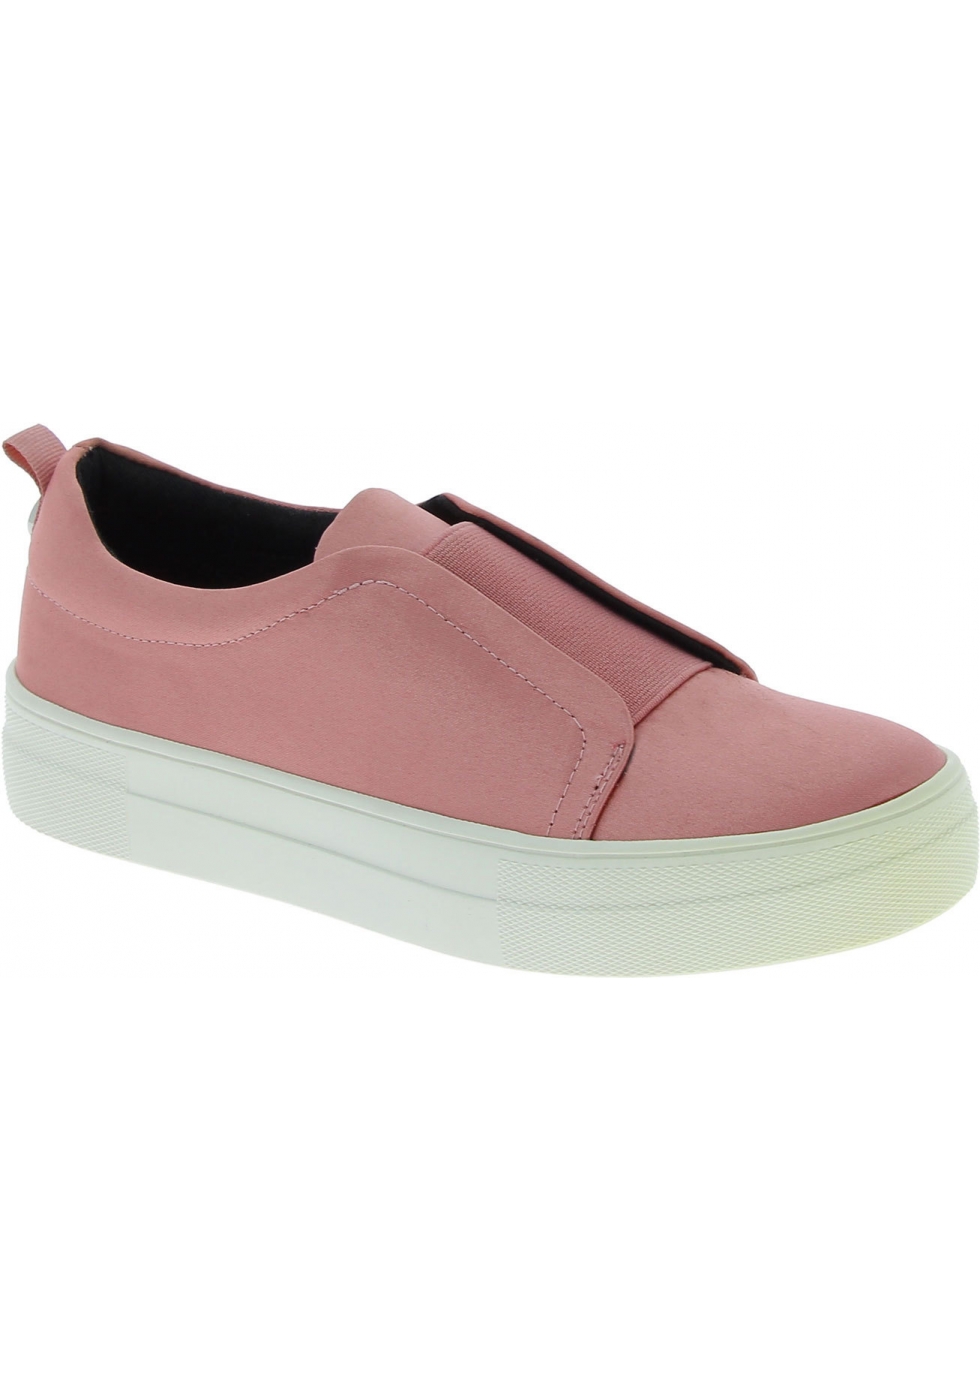 Steve Madden Women's fashion platform laceless slip-on shoes in pink satin - Boutique